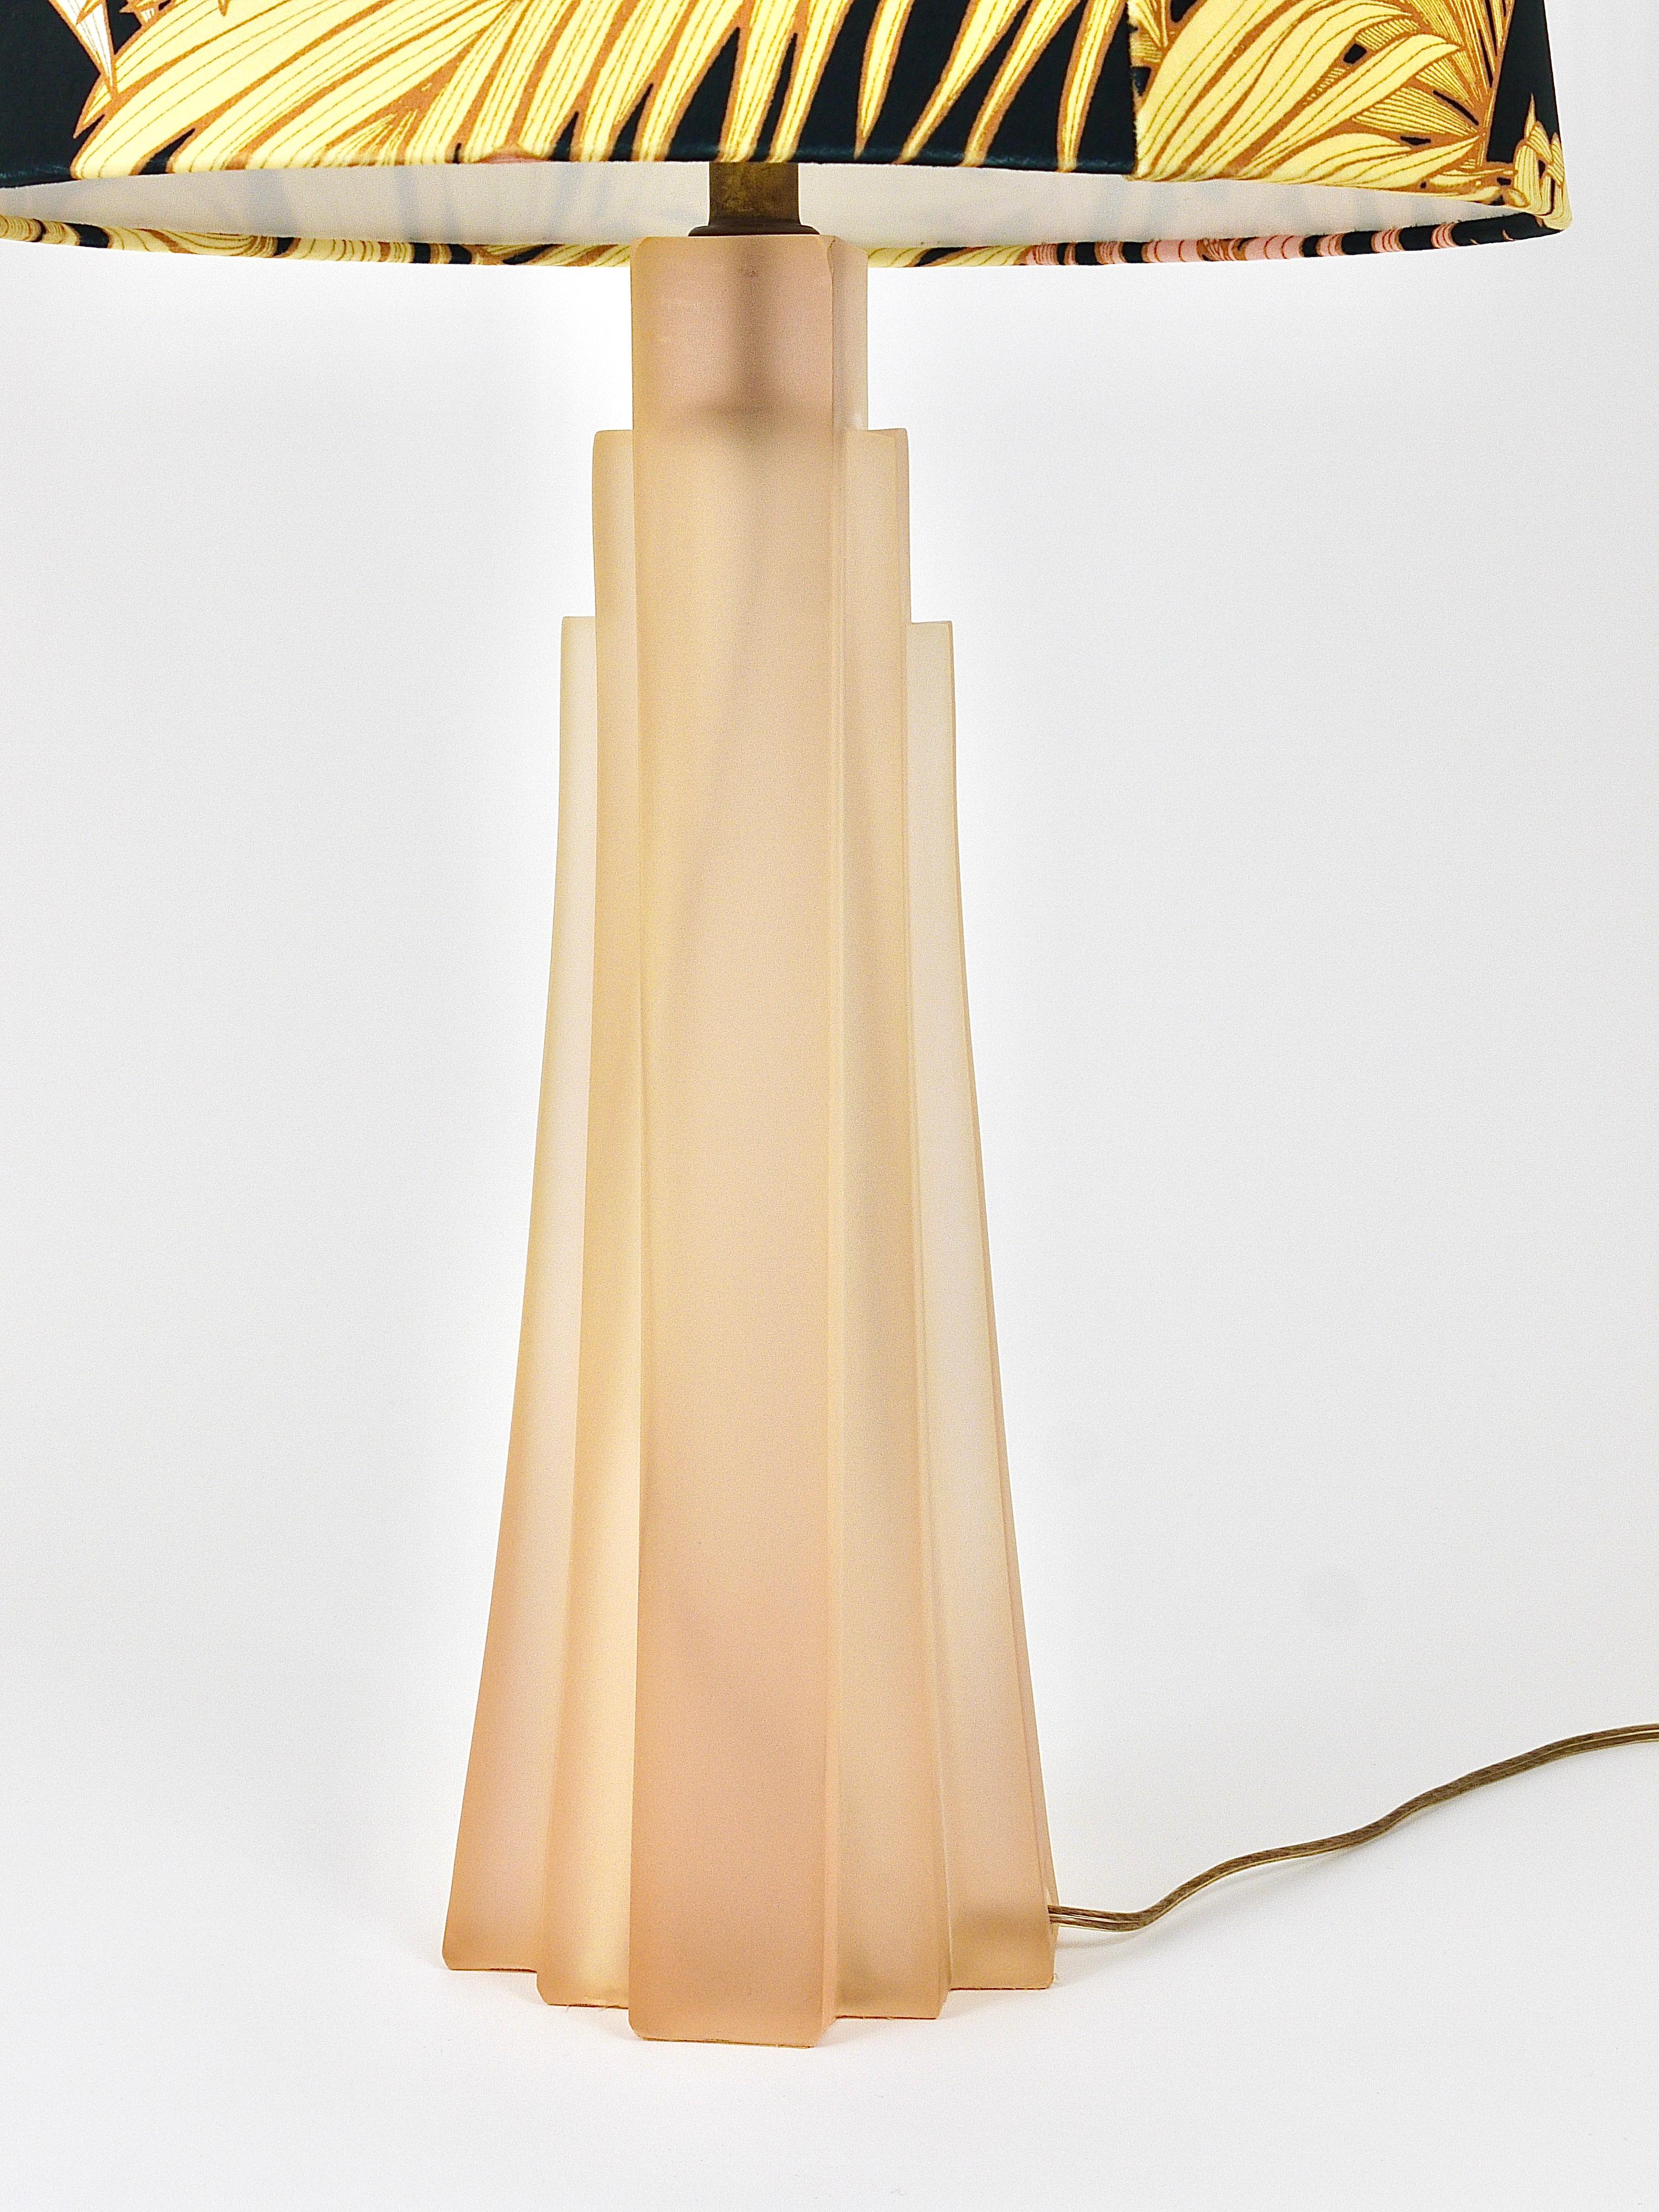 Paolo Gucci Art Deco Skyscraper Table Lamp, Lucite, Brass, Velvet, Italy, 1980s For Sale 13